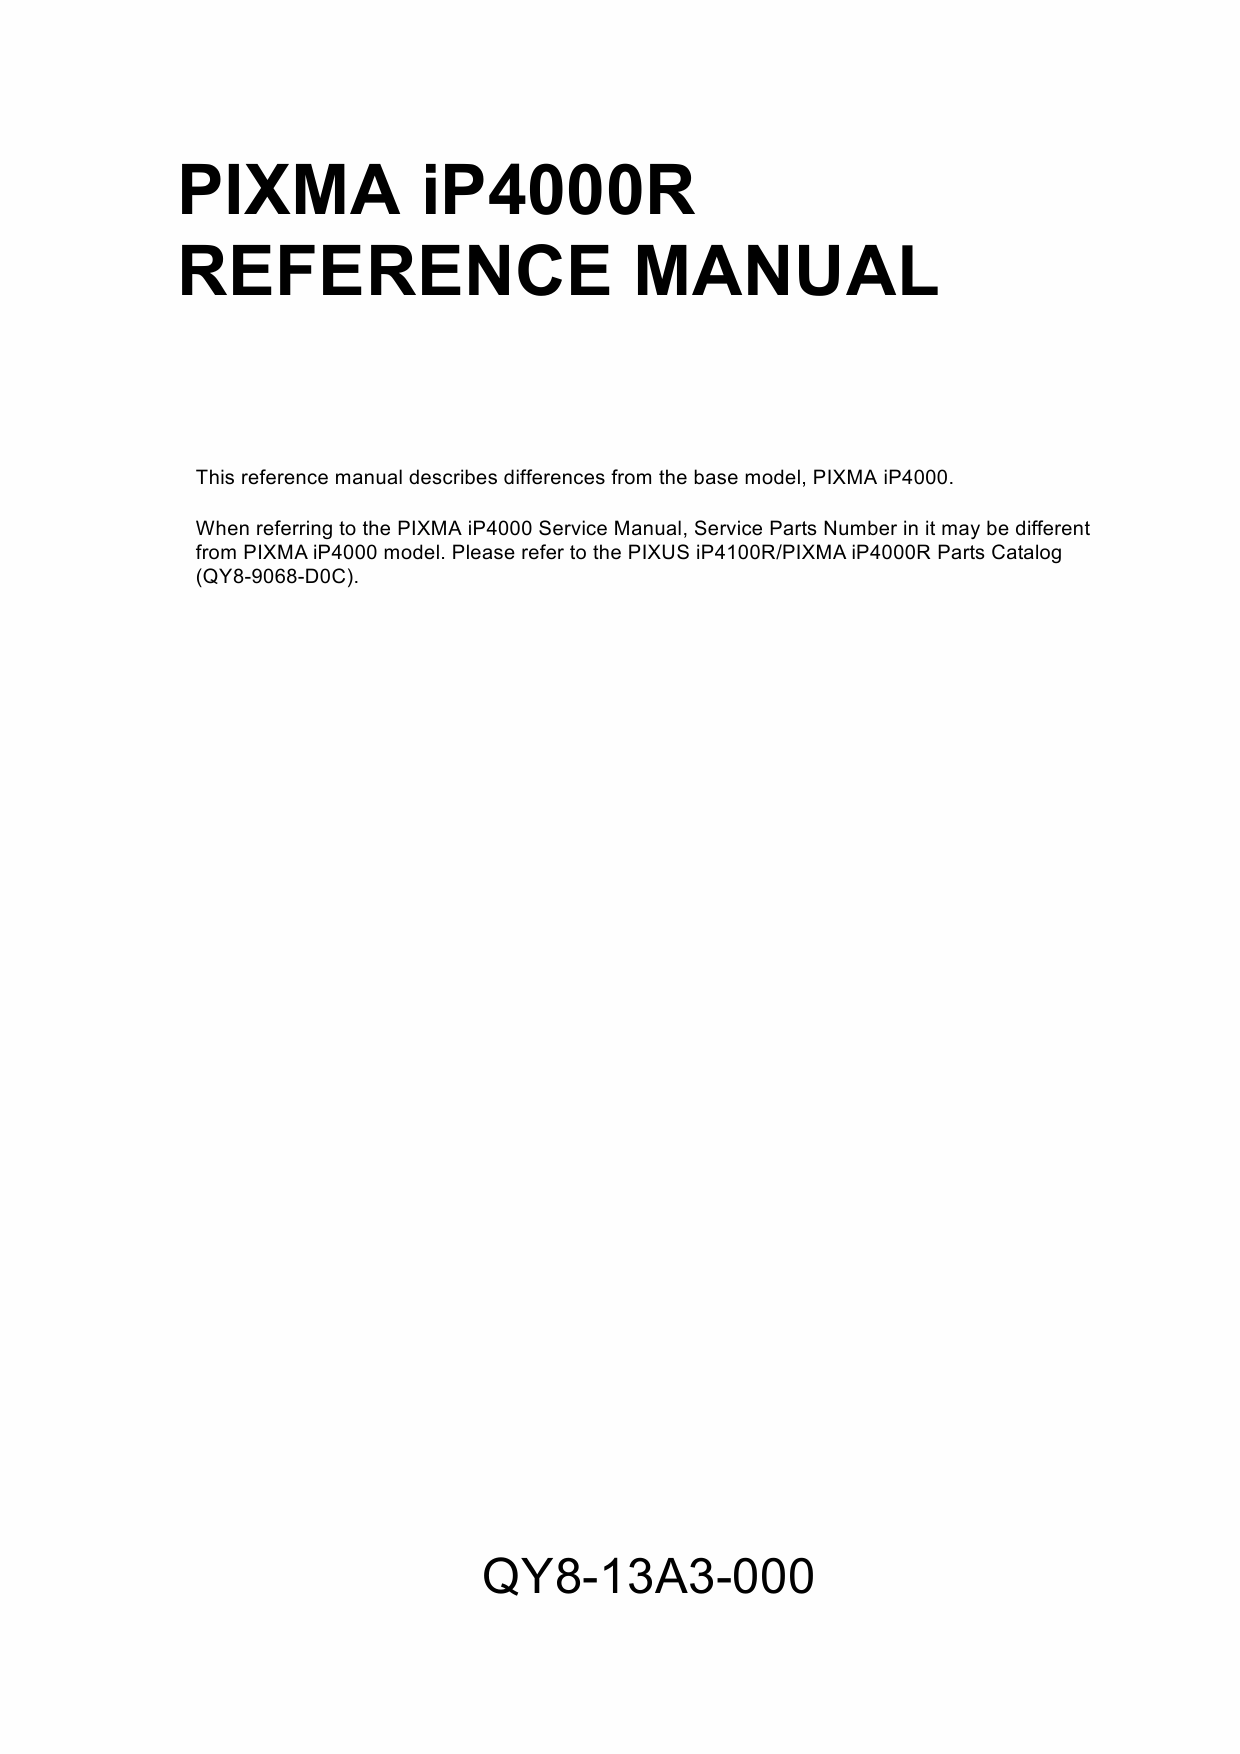 Canon PIXMA iP4000R Service Manual-2